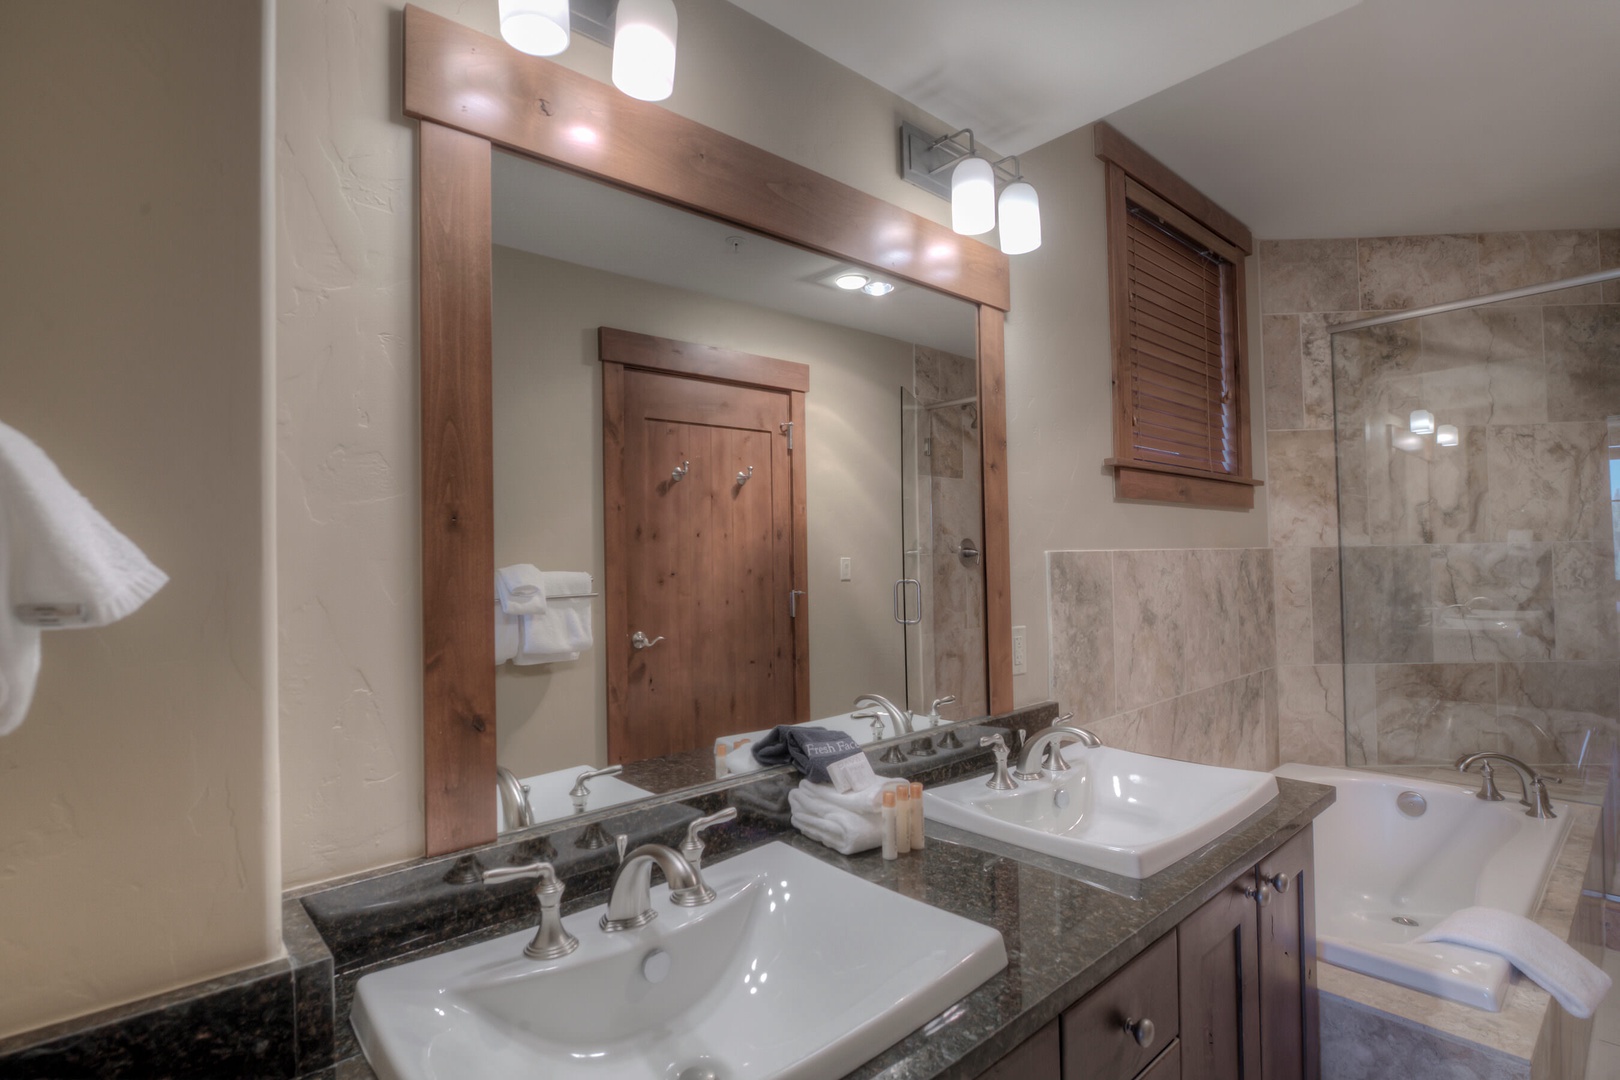 En suite bathroom with standing shower, soaking tub, and dual sinks